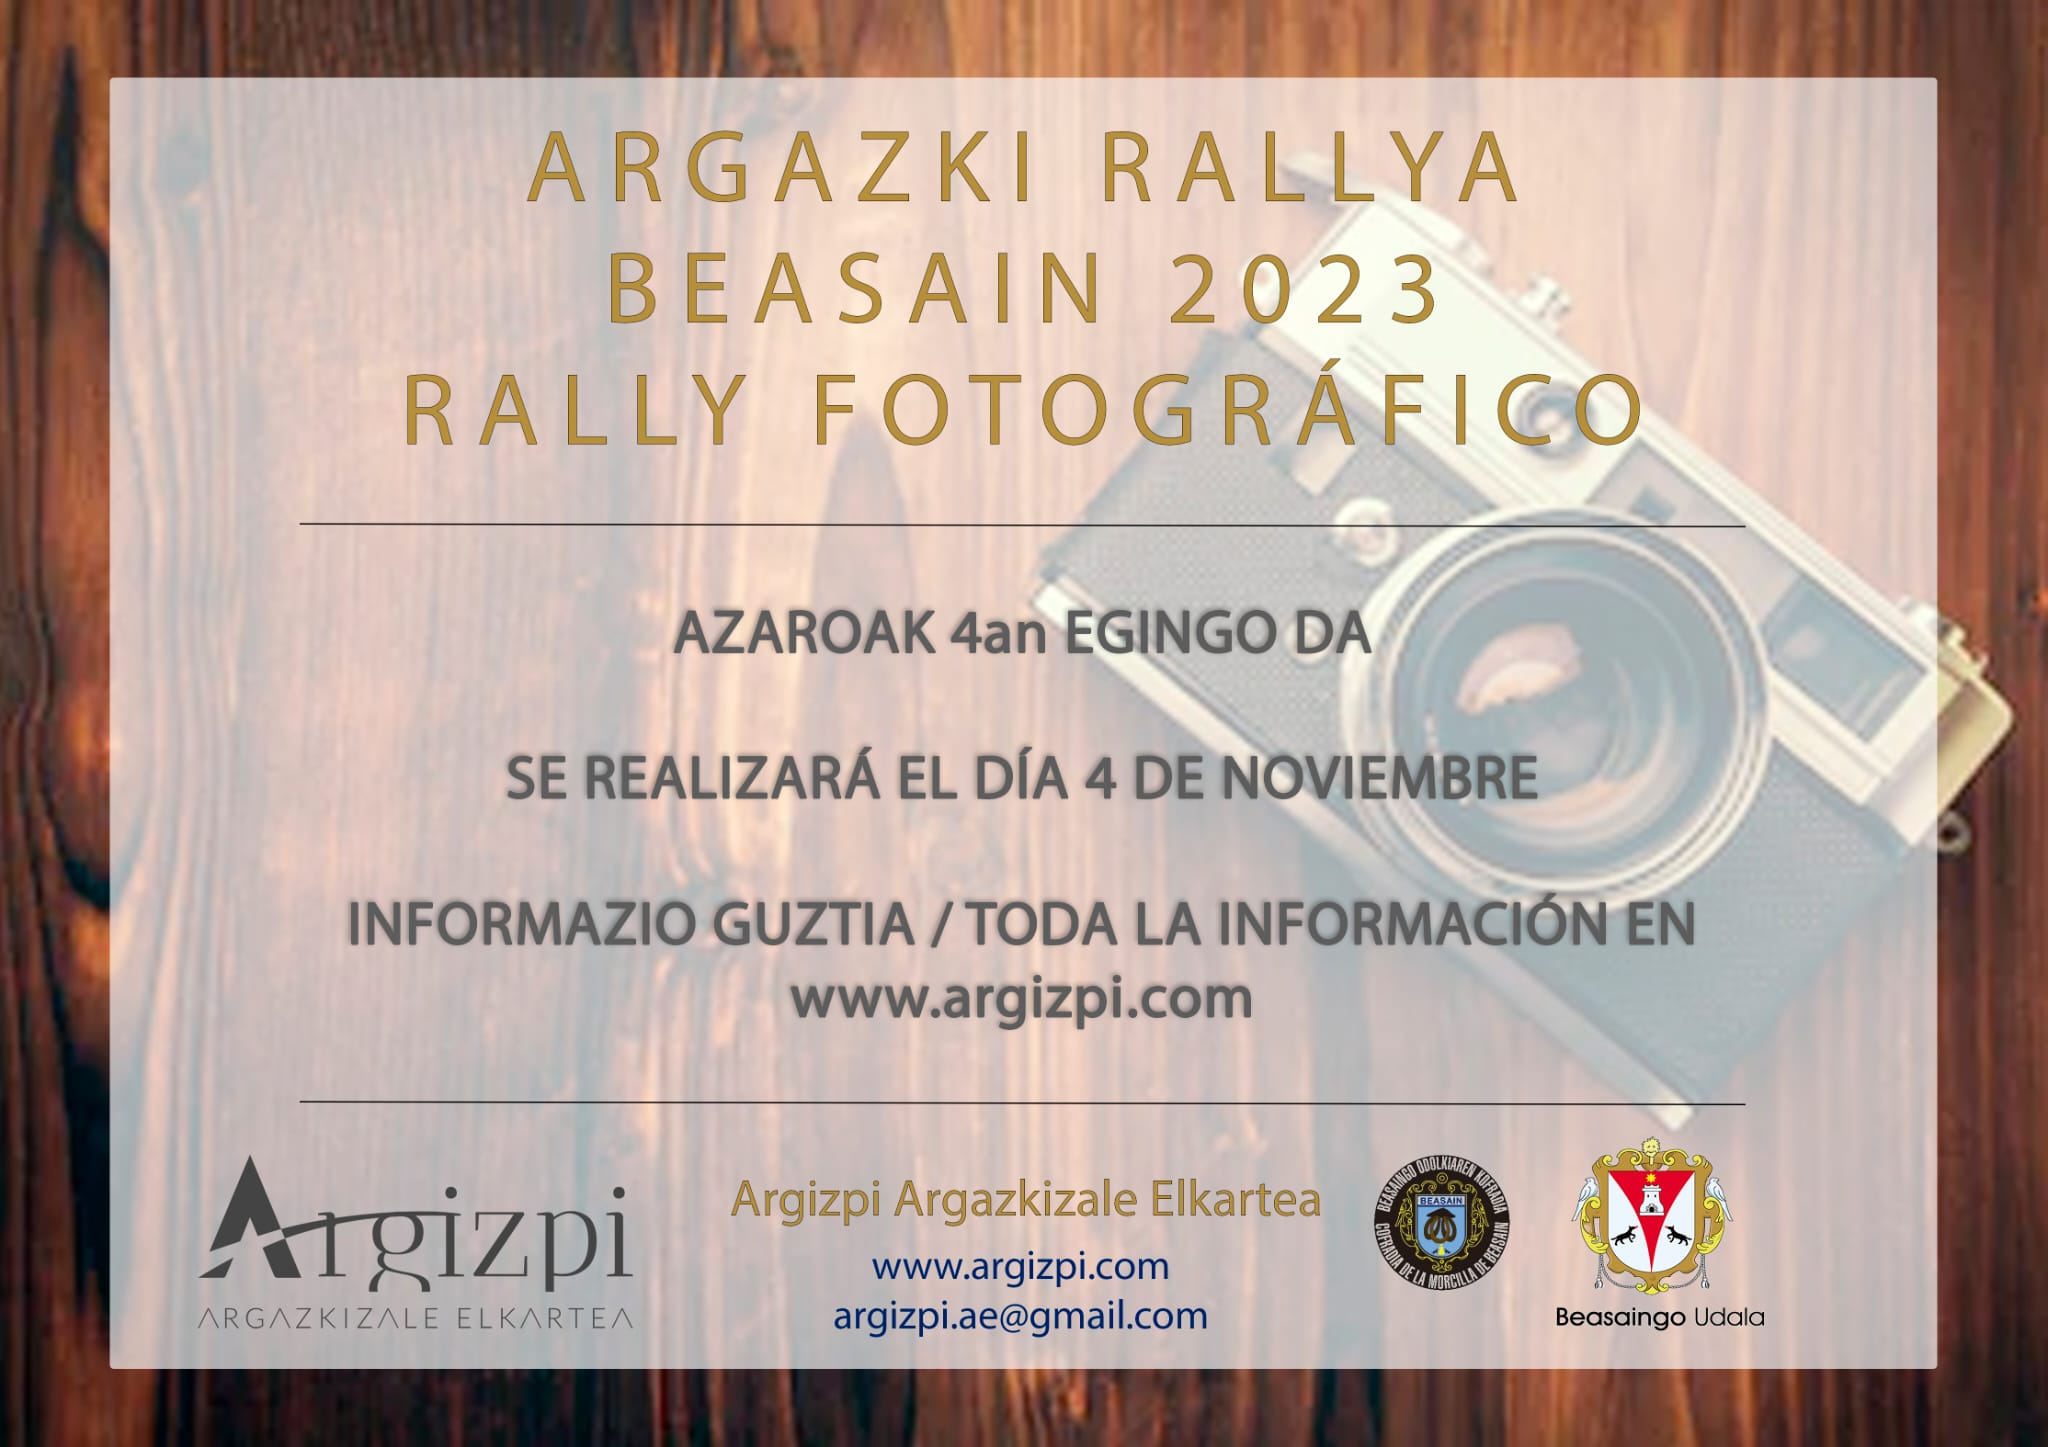 Cartel del rally fotográfico Argizpi 2023 de Beasain